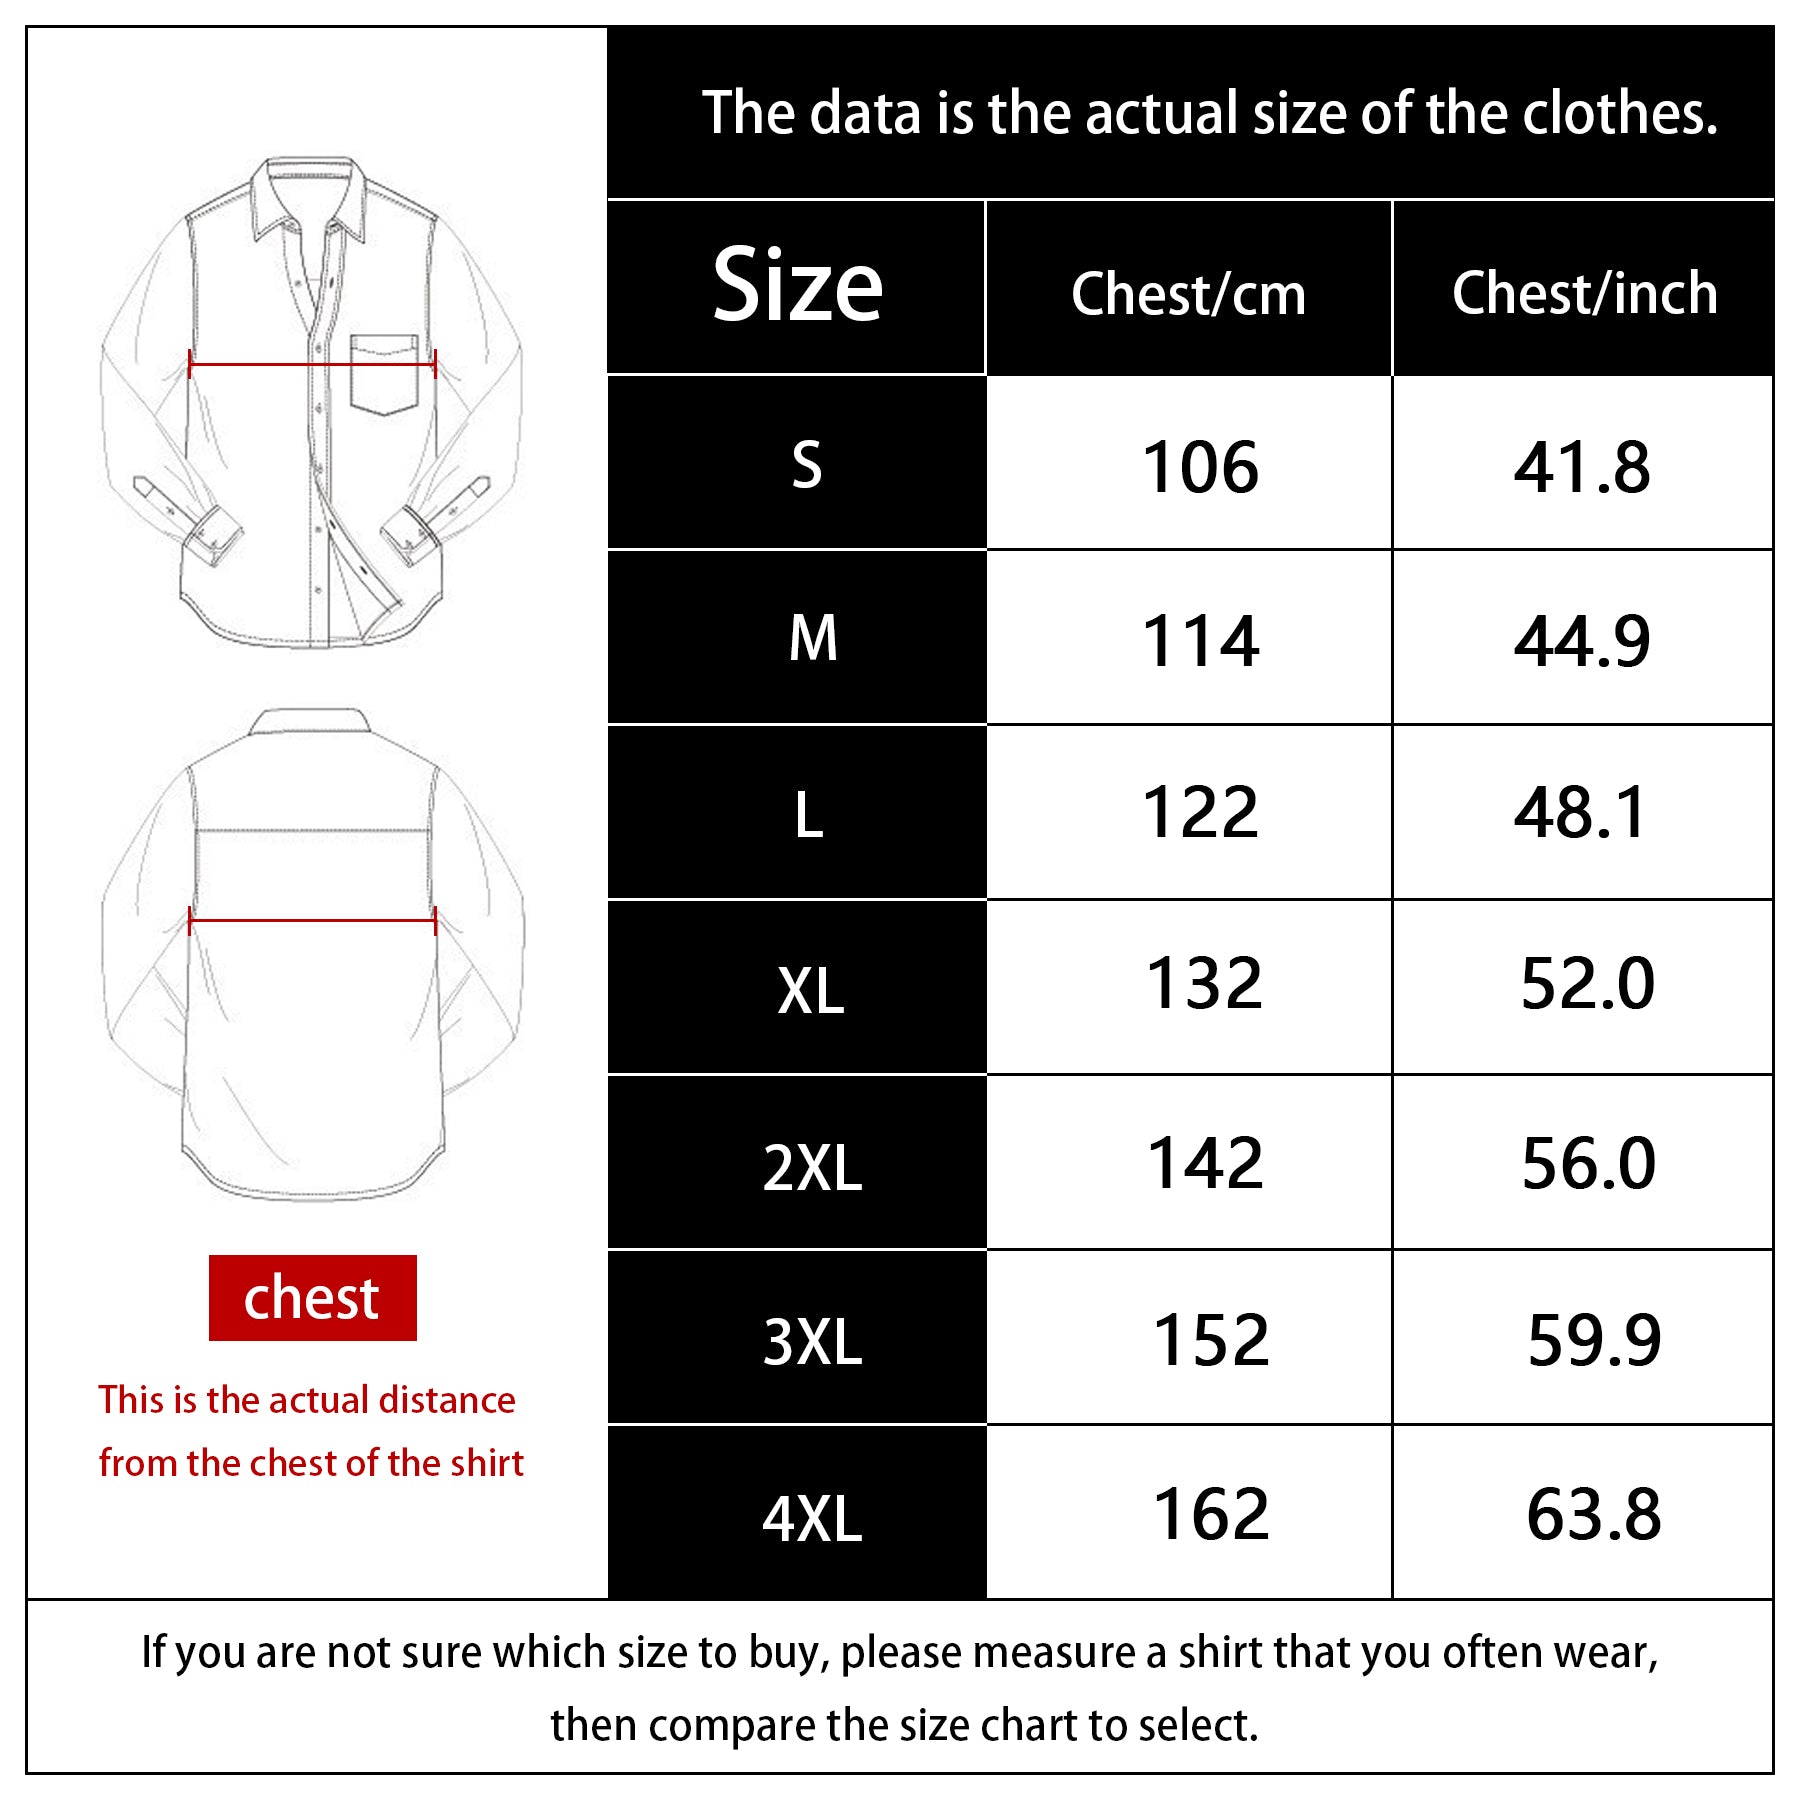 Dubinik®Mens Flannel Shirts Long Sleeve Flannel Shirt For Men Warm Casual Soft Cotton Button Down Plaid Mens Flannel Shirt #3402